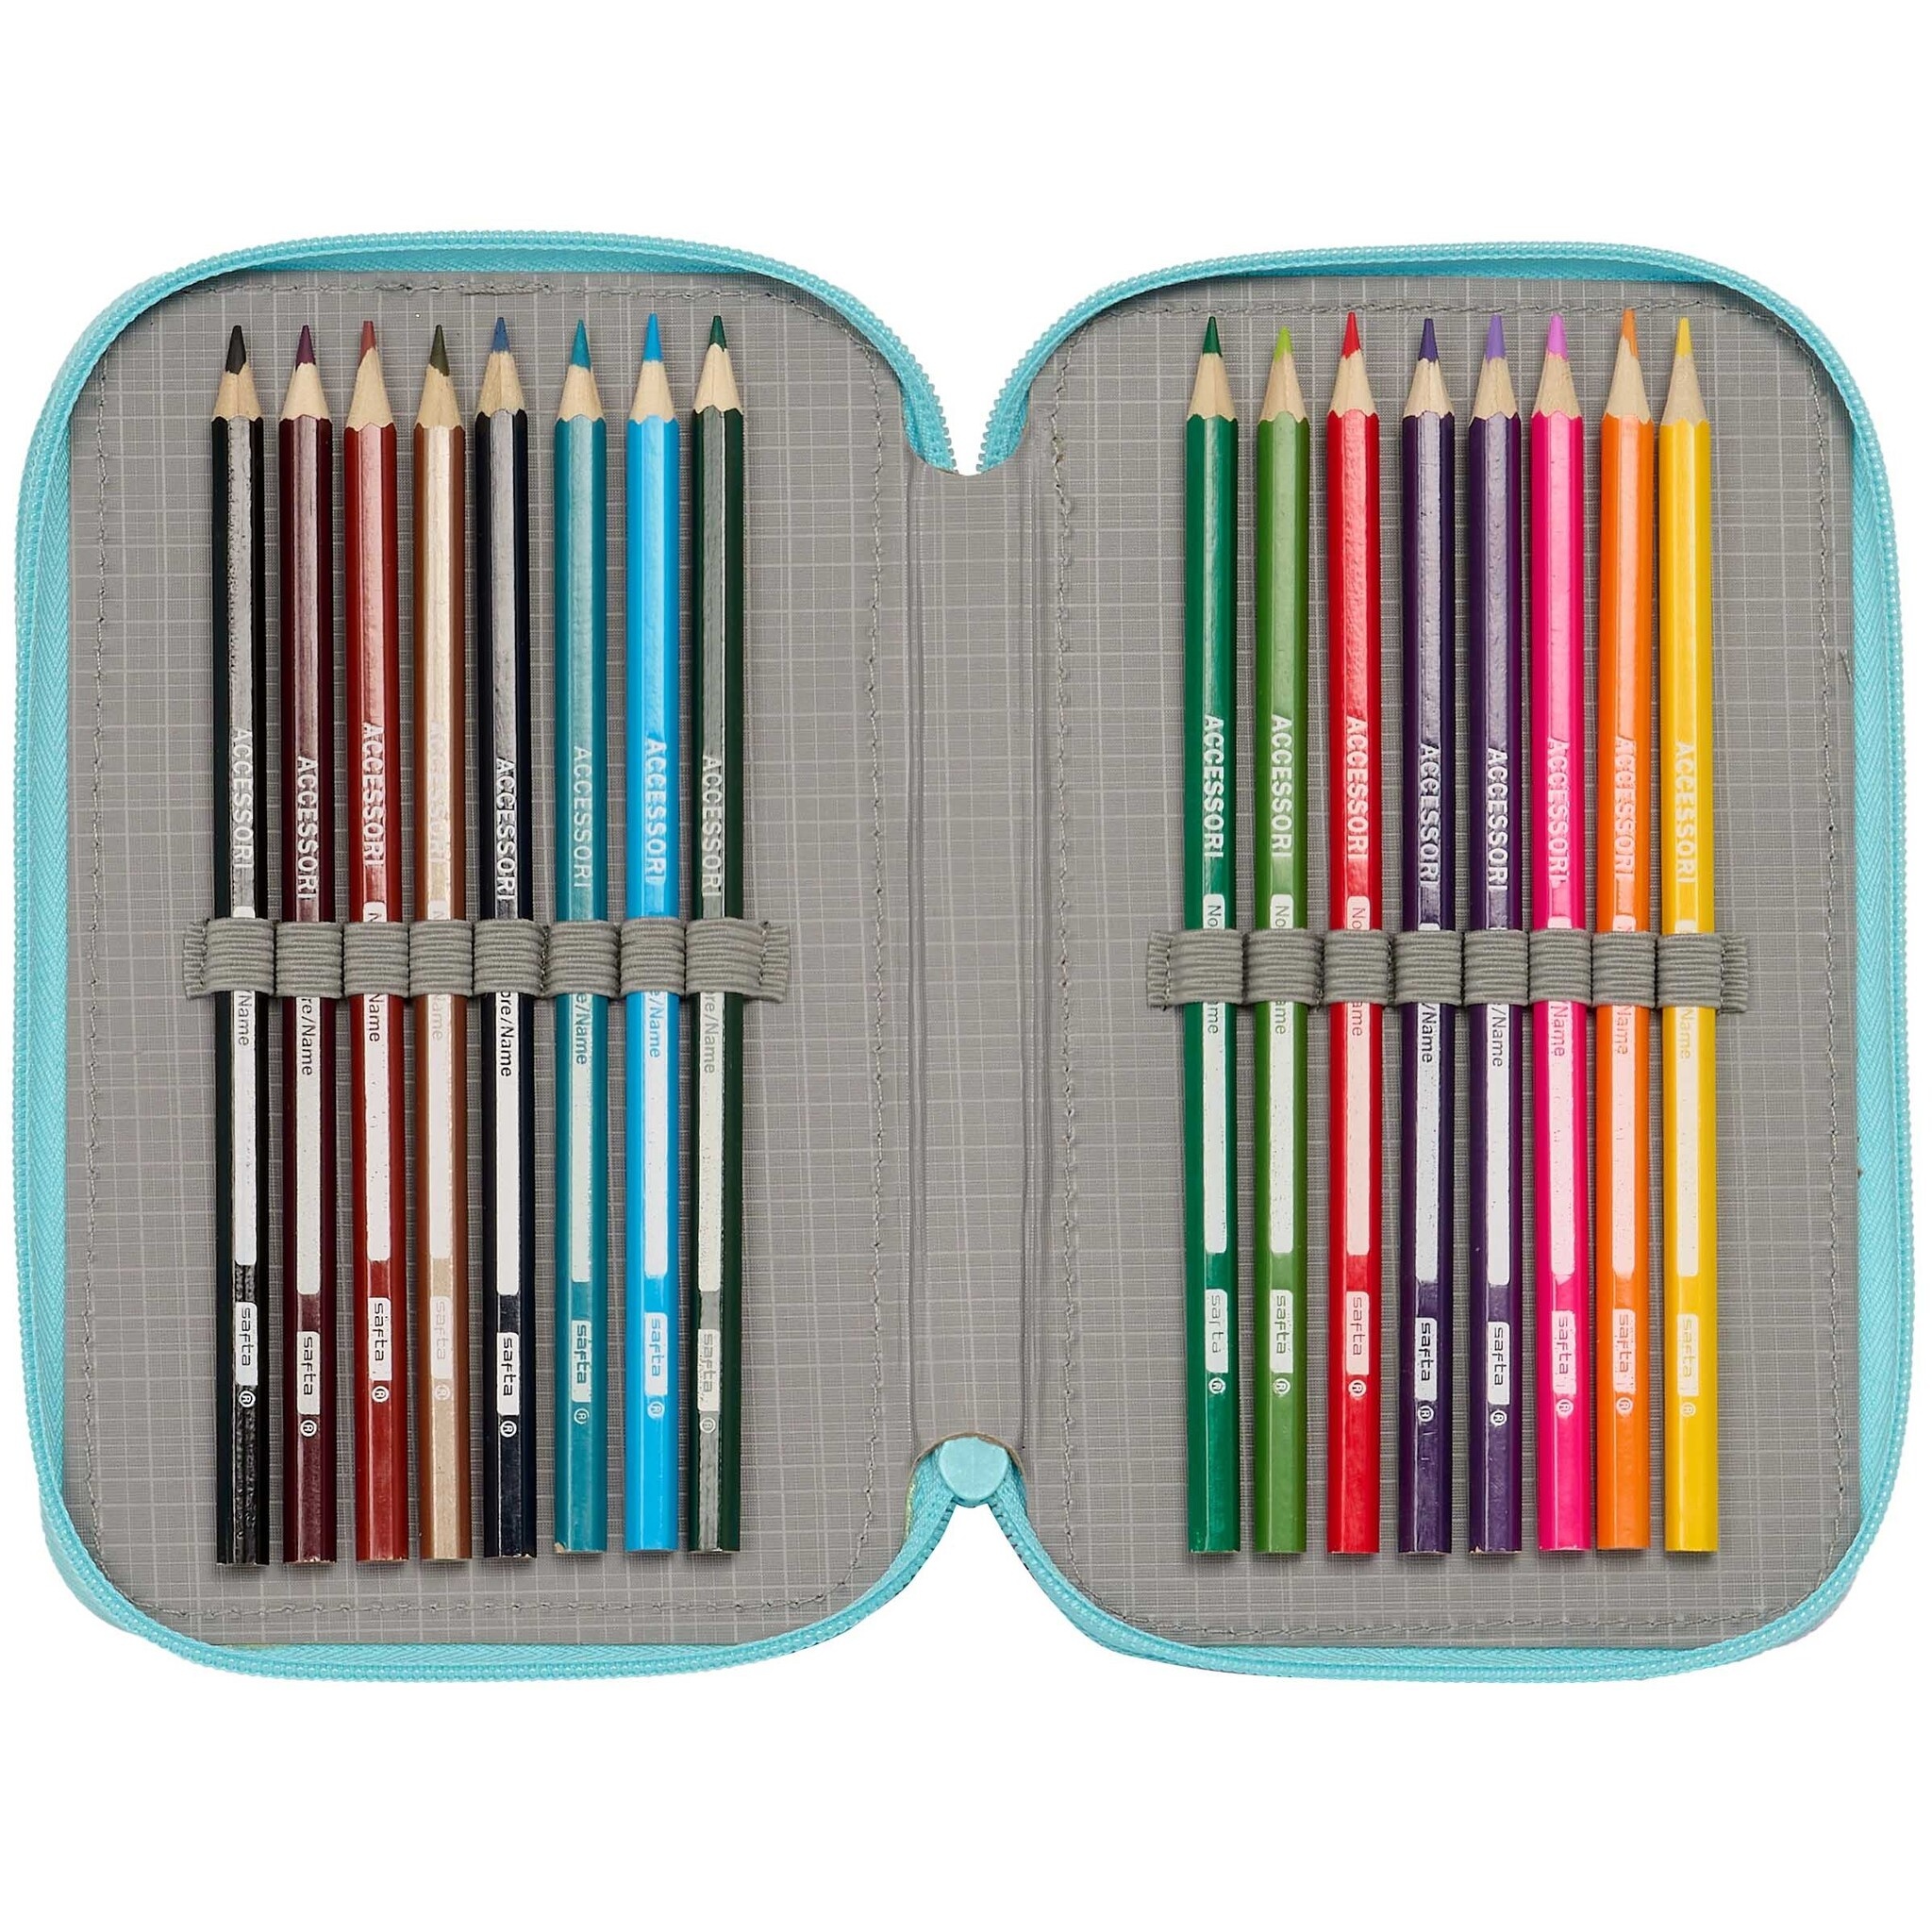 Disney Frozen Filled Pencil Case, Hello Spring - 36 pieces - 19.5 x 12.5 x 5.5 cm - Polyester